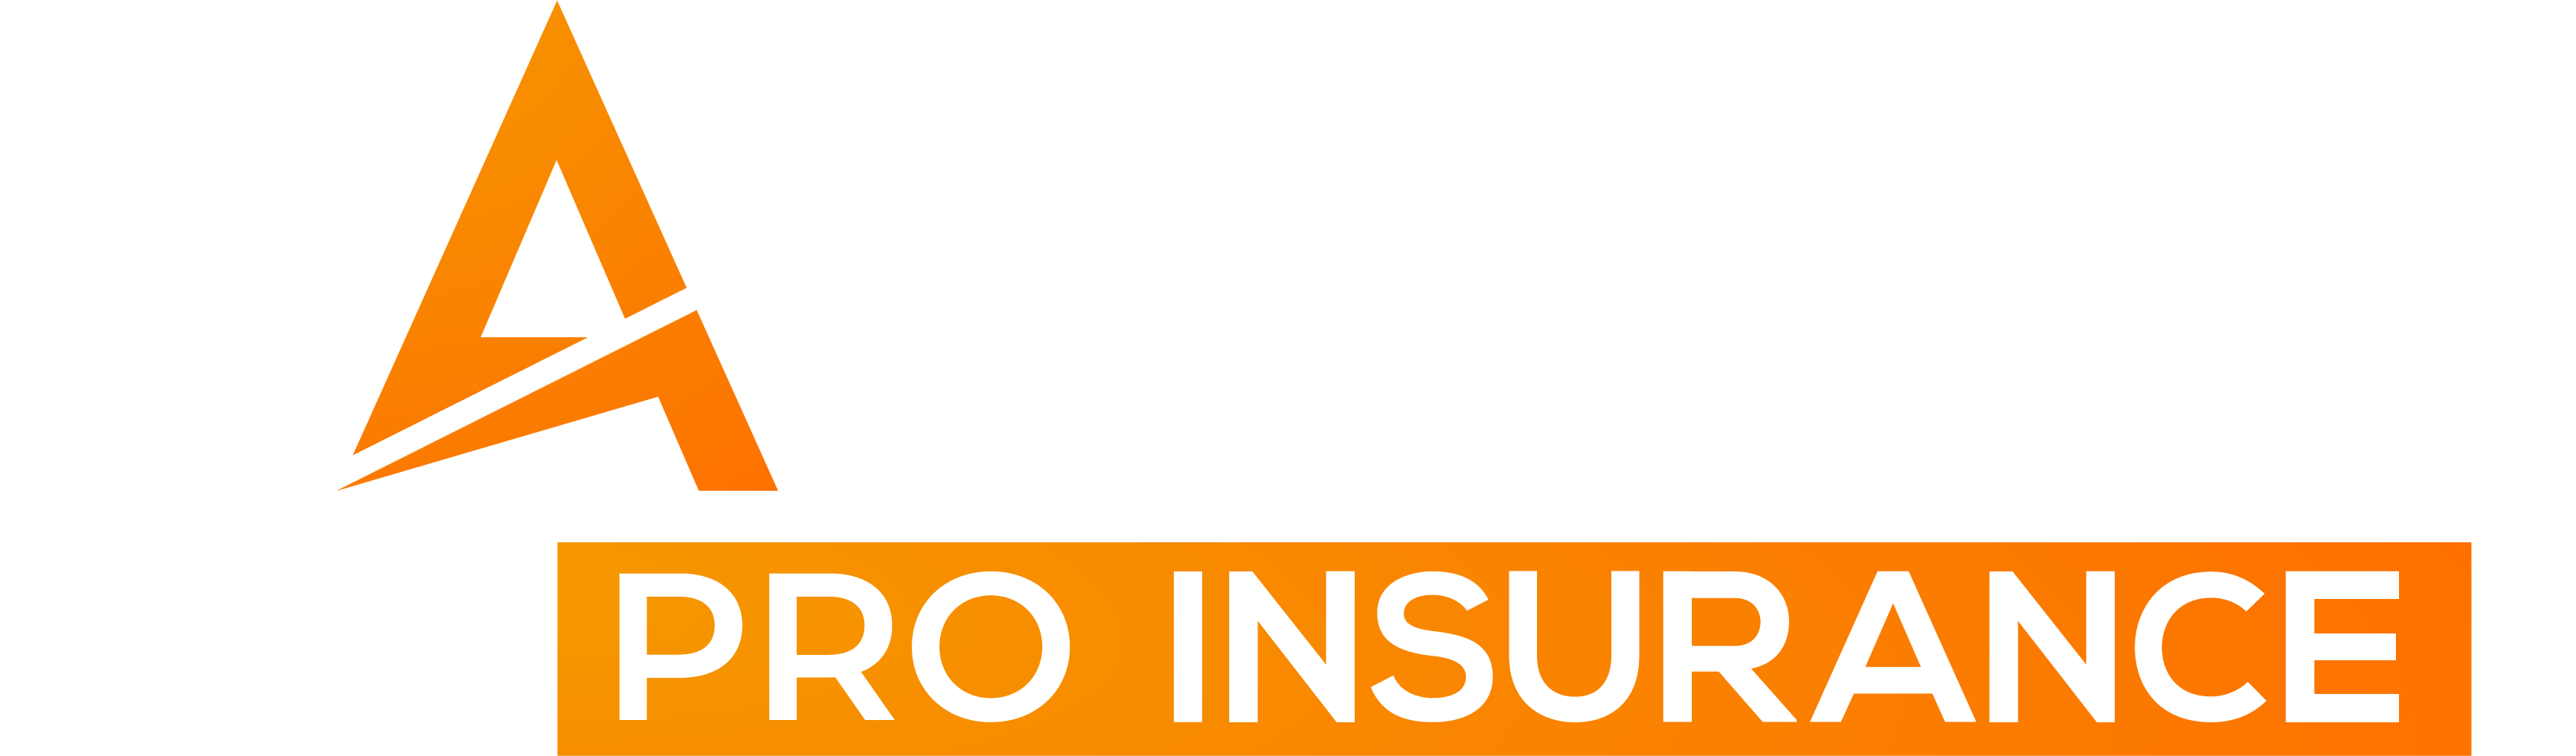 eAdvisorPro Insurance